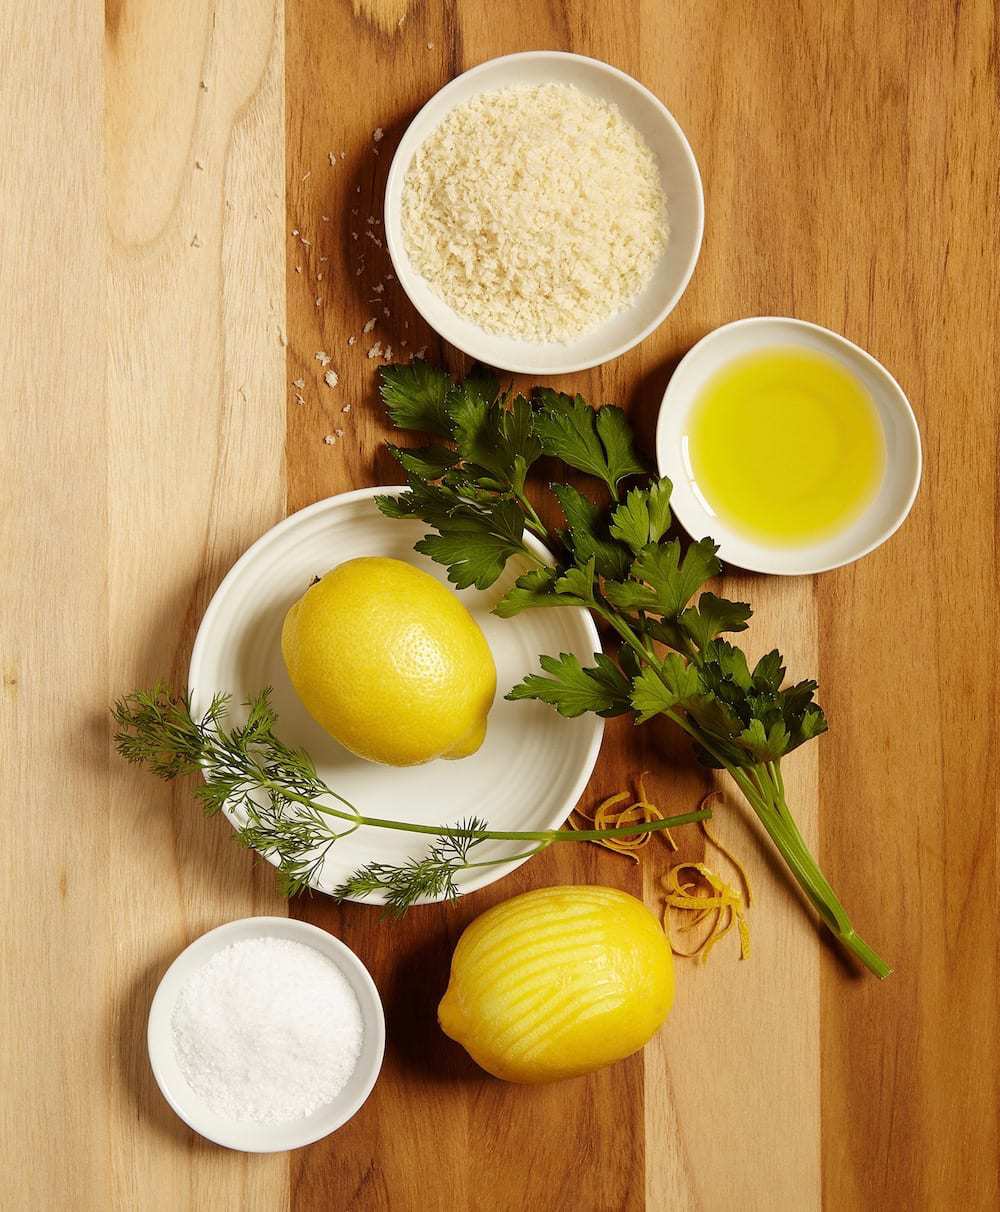 Ingredients for lemon fish